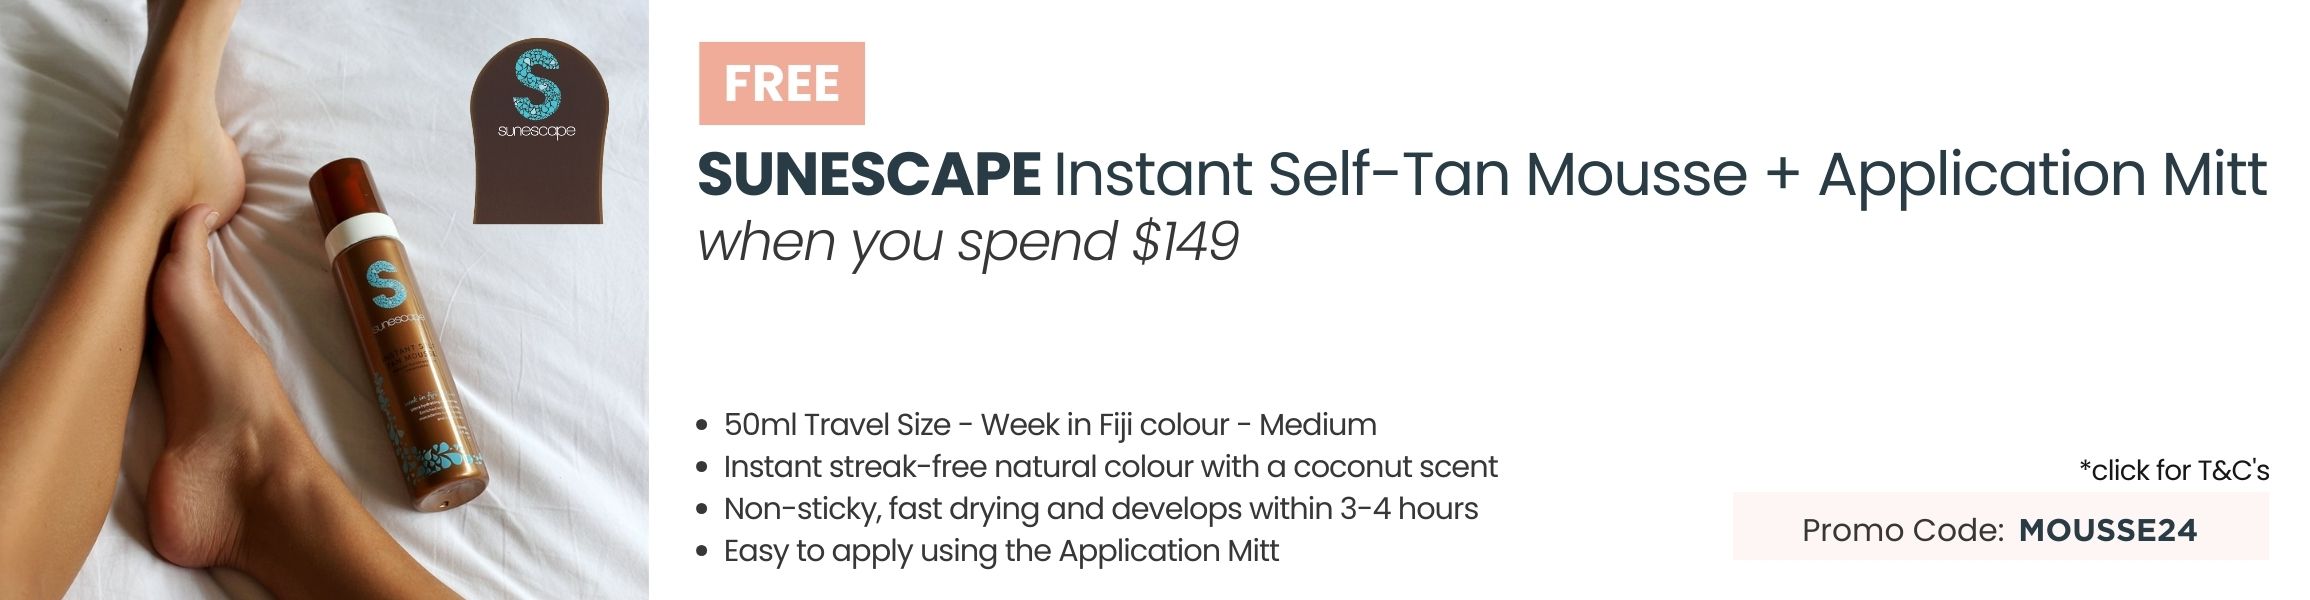 FREE Sunescape Instant Self-Tan Mousse + Application Mitt. Min spend $249. Promo code: MOUSSE24 